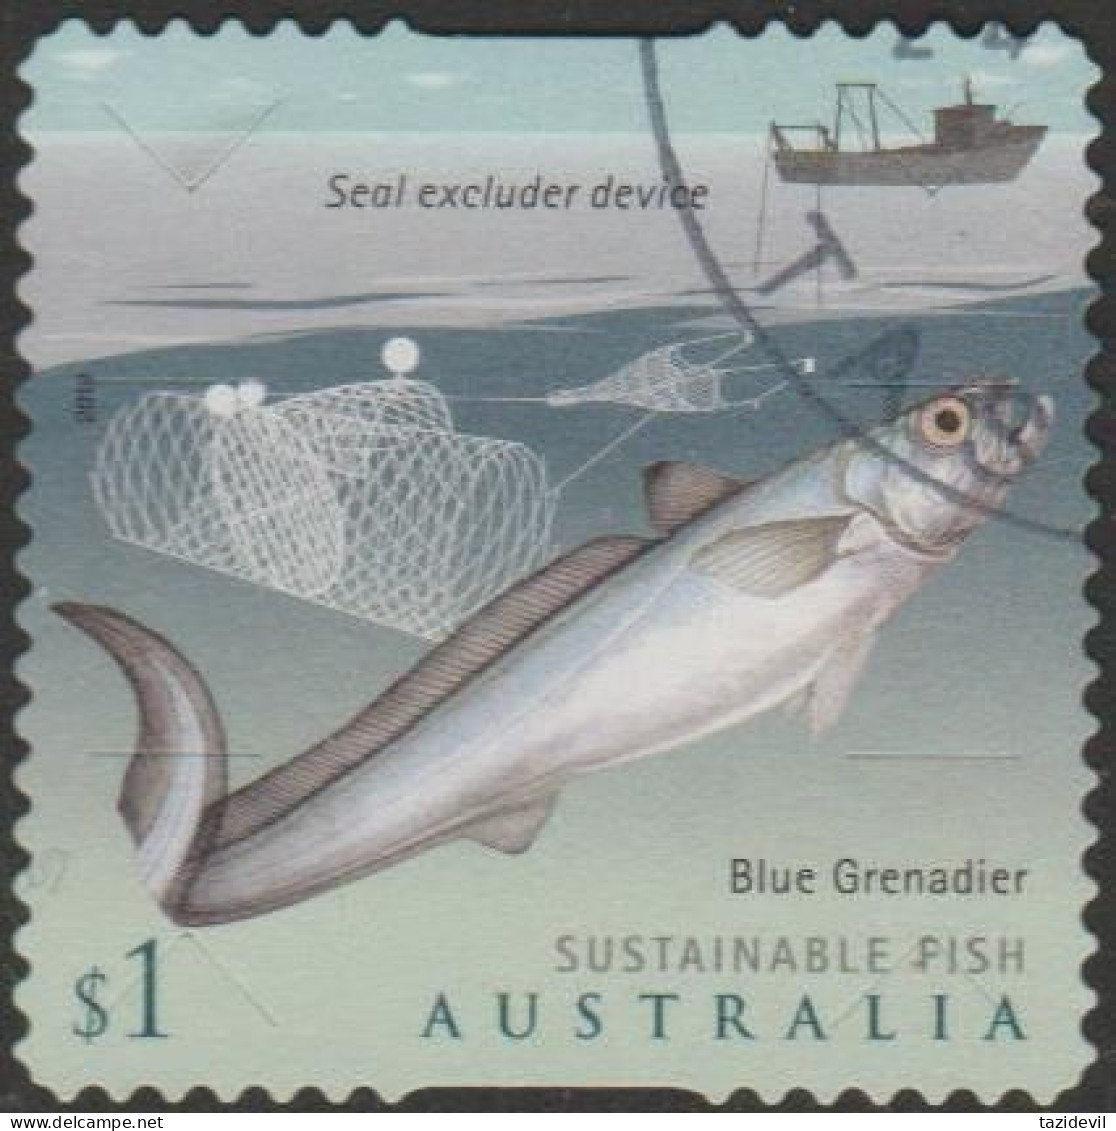 AUSTRALIA - DIE-CUT - USED - 2019 $1.00 Sustainable Fish - Blue Grenadier - Gebraucht